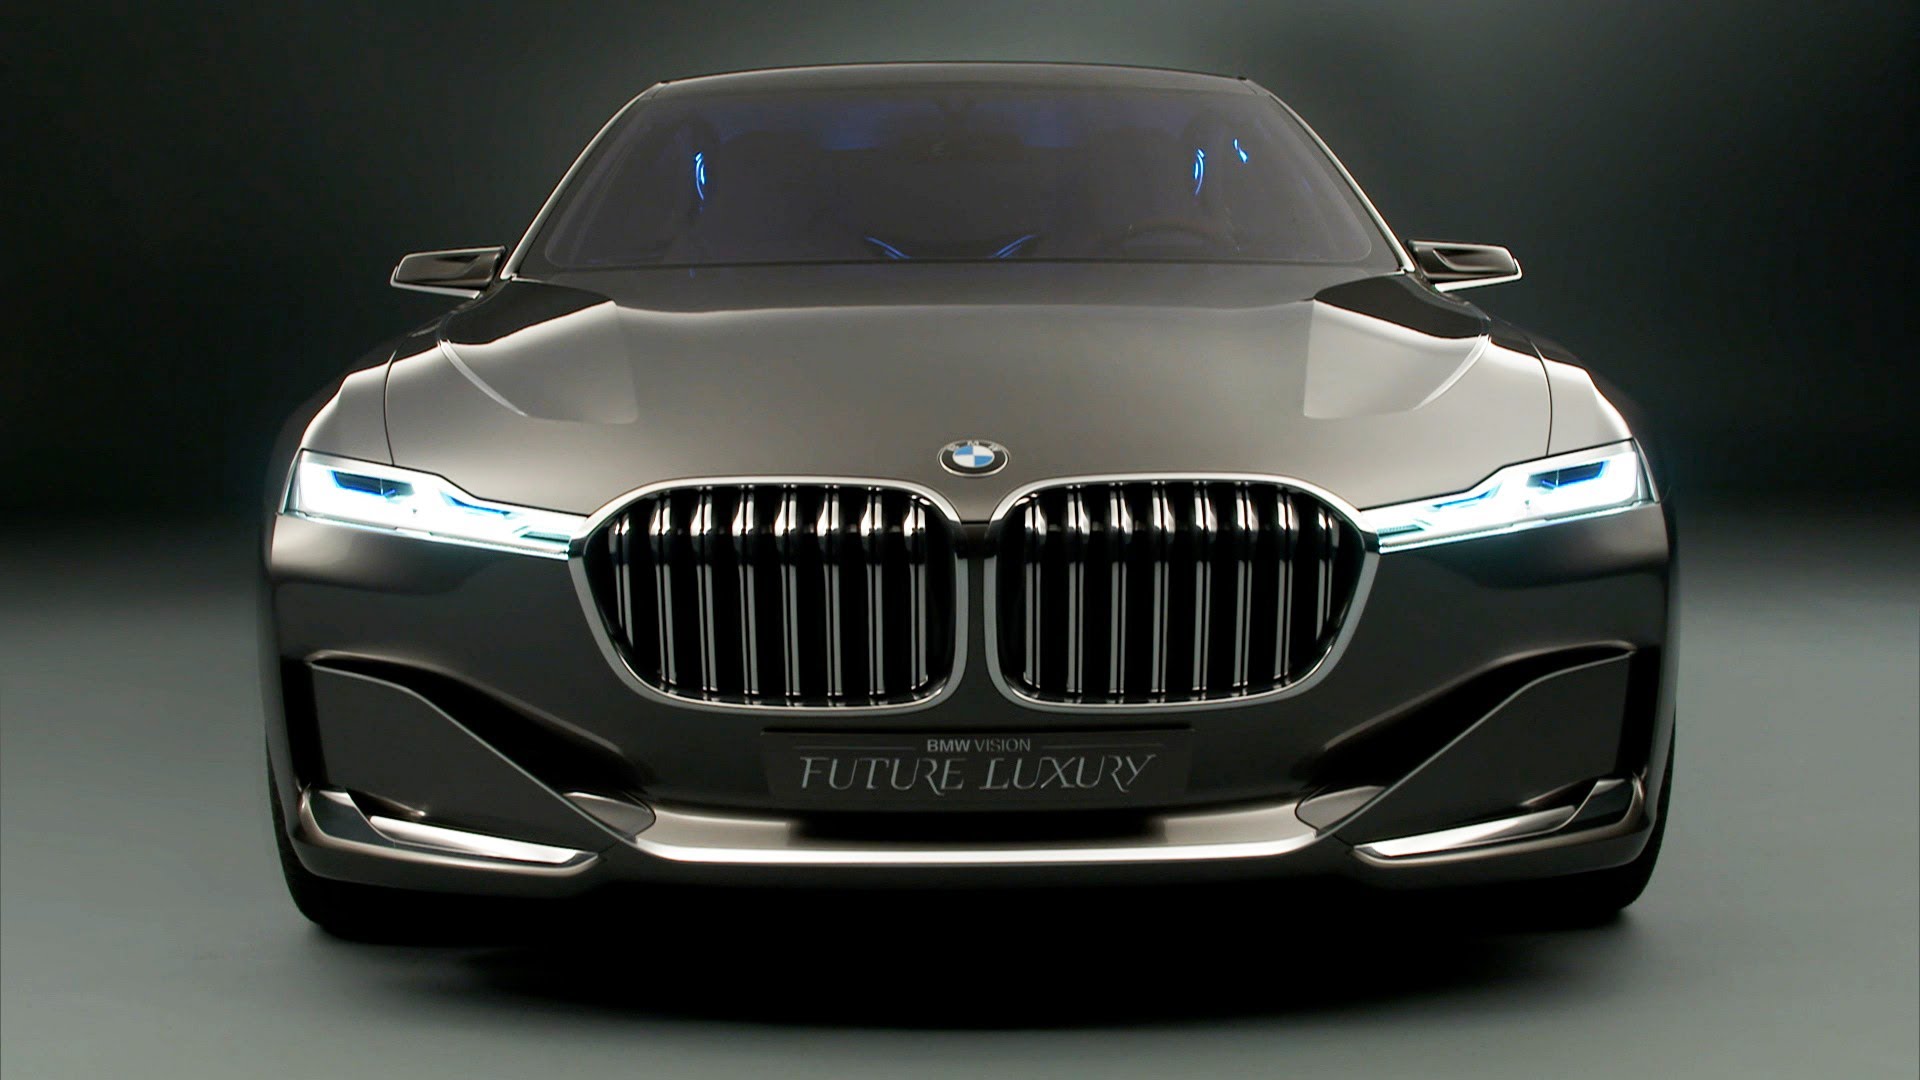 2014 Bmw Vision Future Luxury Concept #3